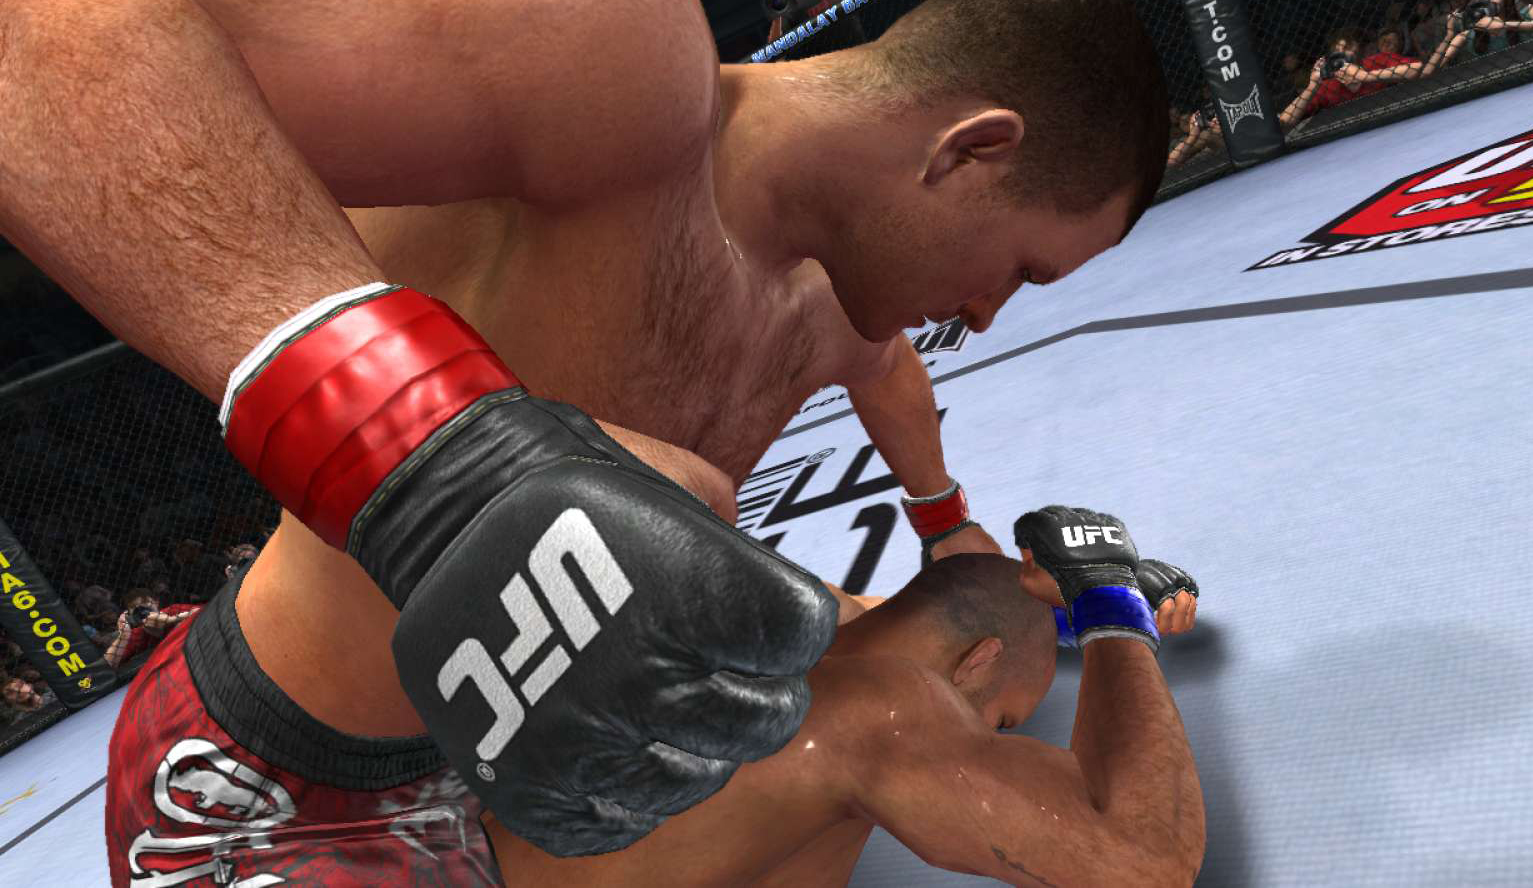 UFC-Undisputed-3-vs-UFC-2010-screenshots-glove.jpg